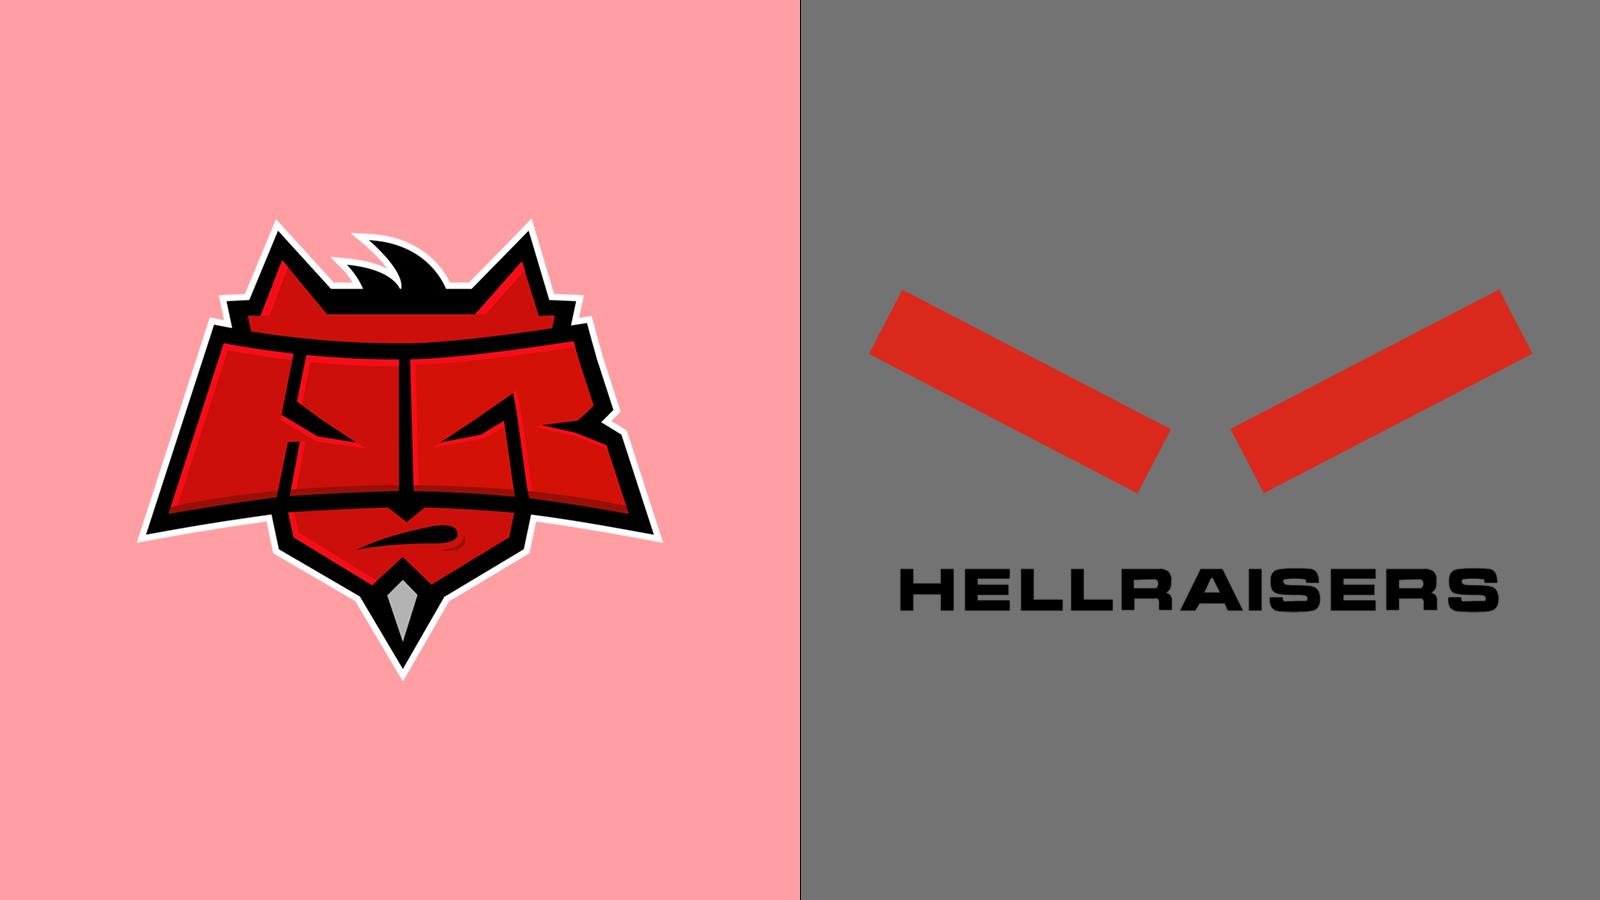 HellRaisers rebrand